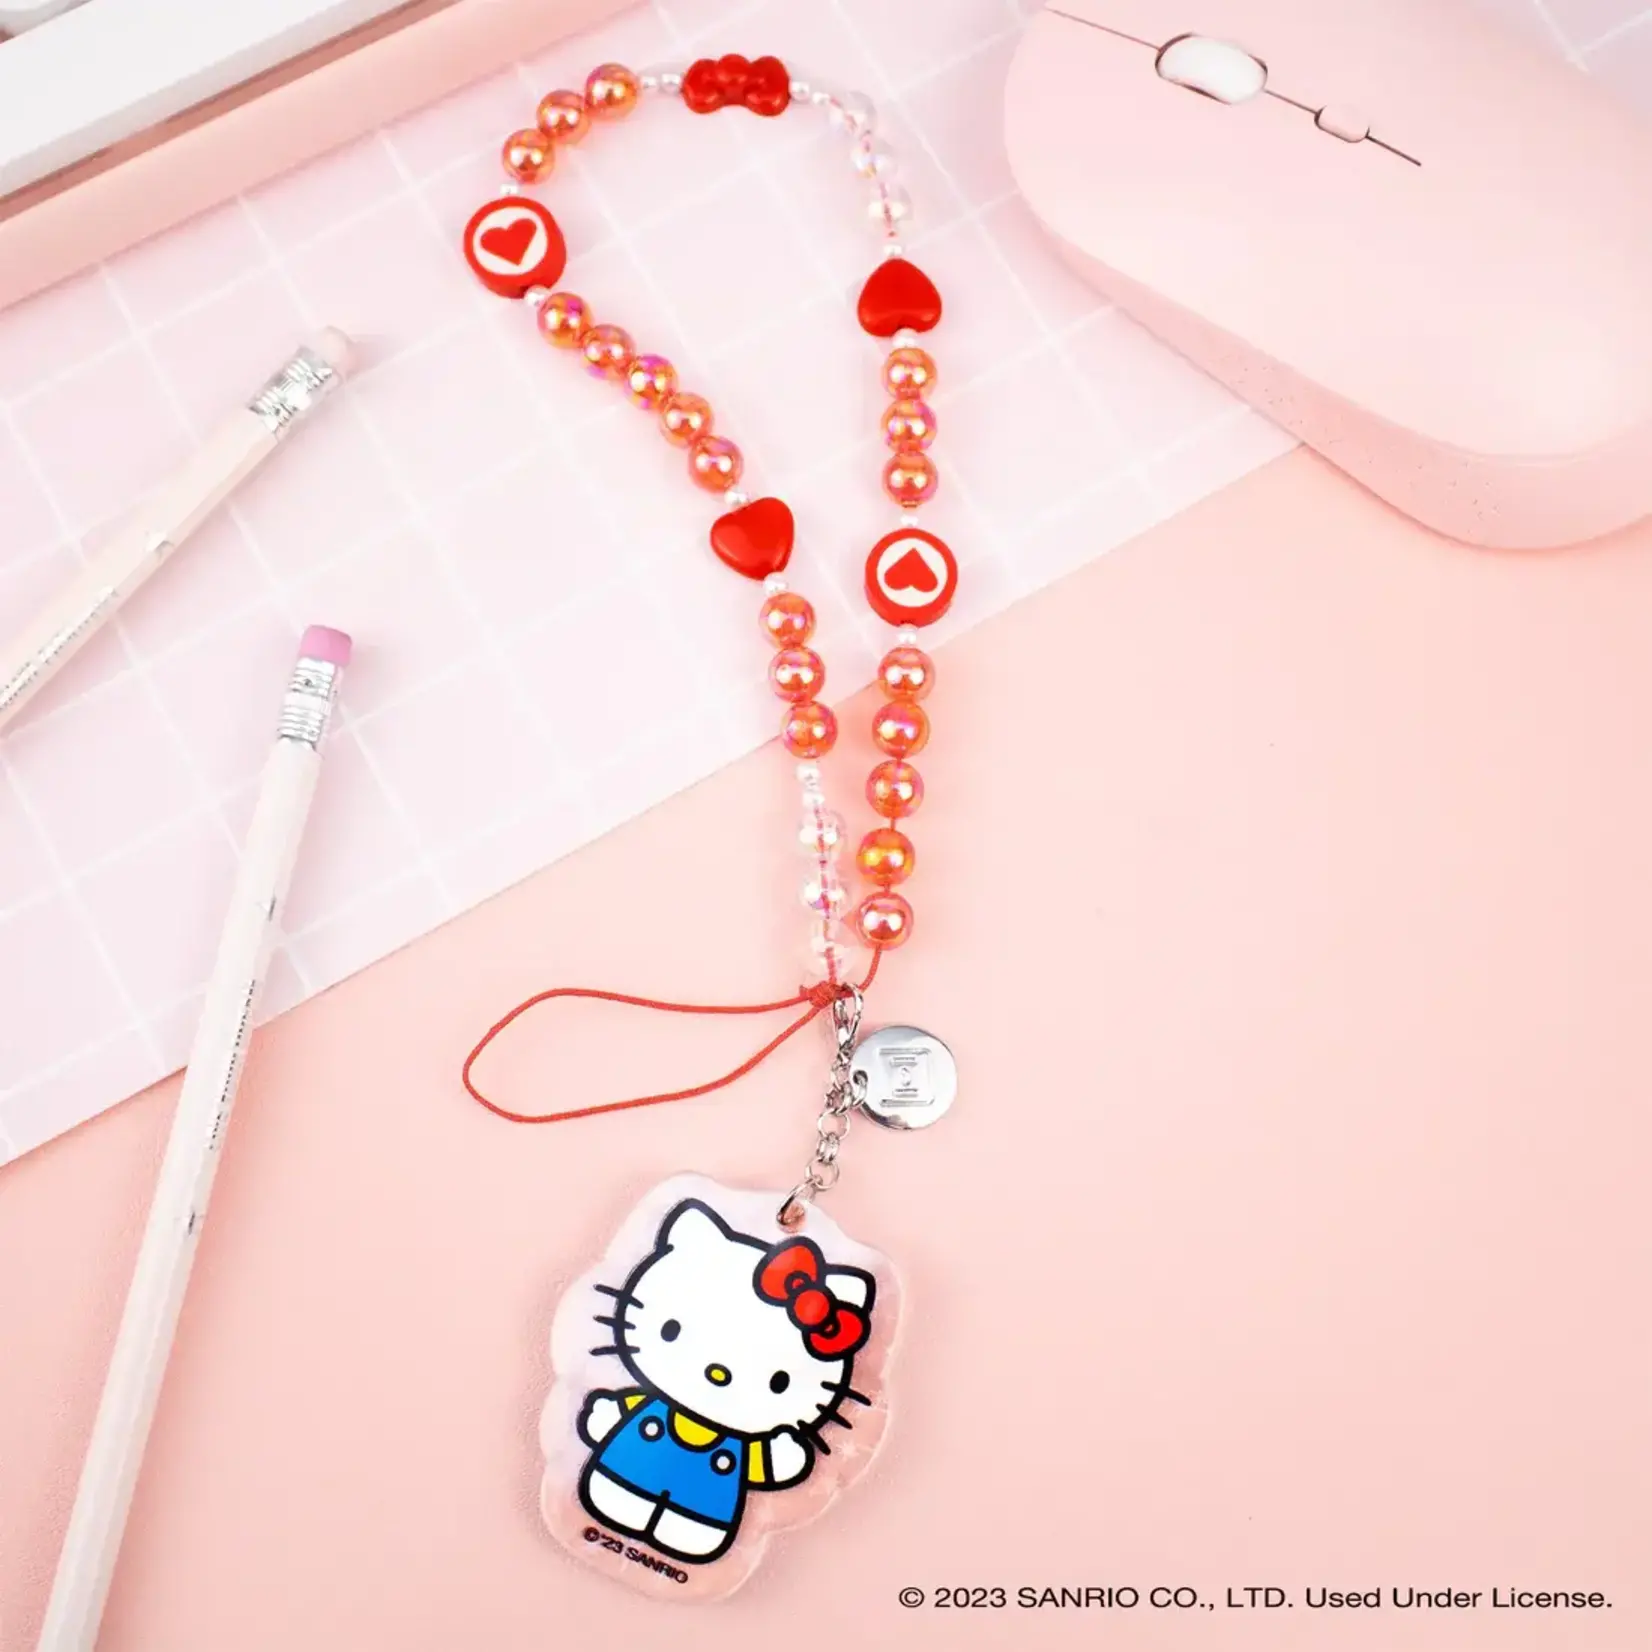 Sanrio Sanrio Beaded Charm Wrist Strap - Hello Kitty